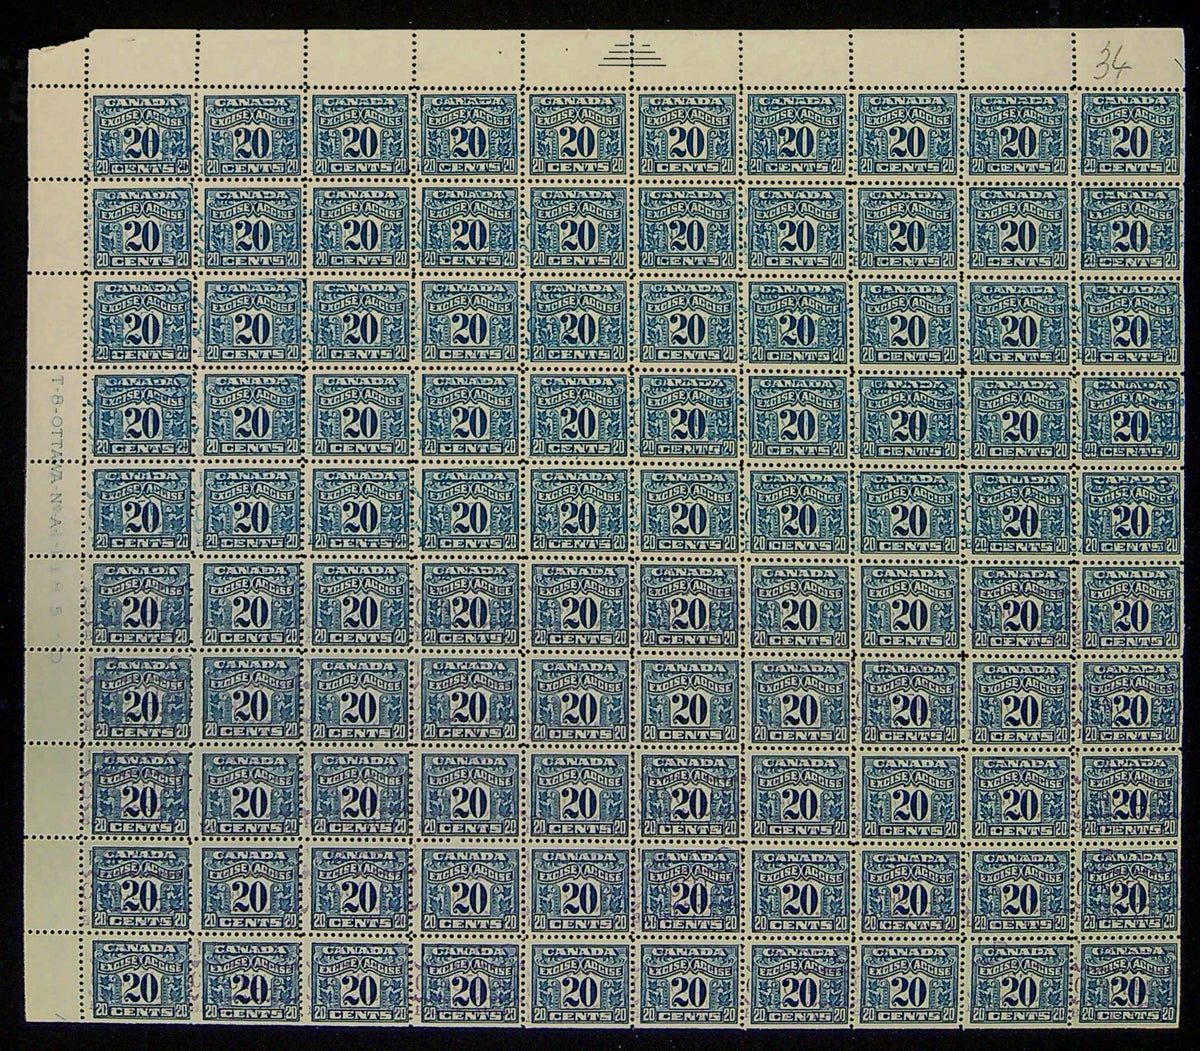 0043FX2108 - FX43 - Used/Mint Sheet